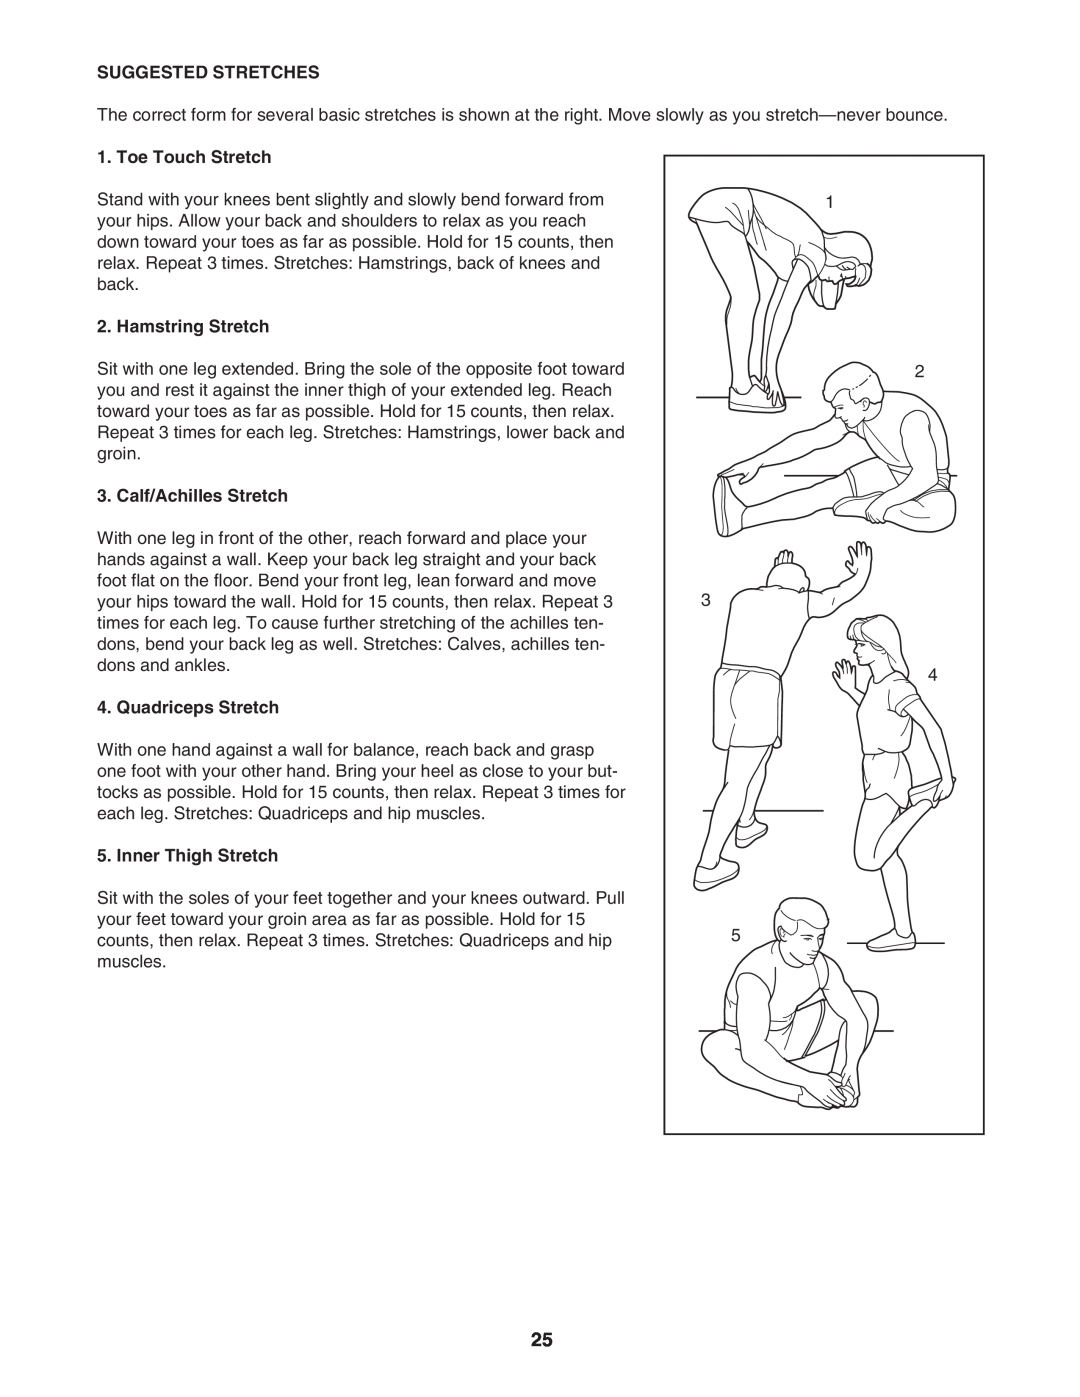 ProForm 831.29605.0 Suggested Stretches, Toe Touch Stretch, Hamstring Stretch, Calf/Achilles Stretch, Quadriceps Stretch 